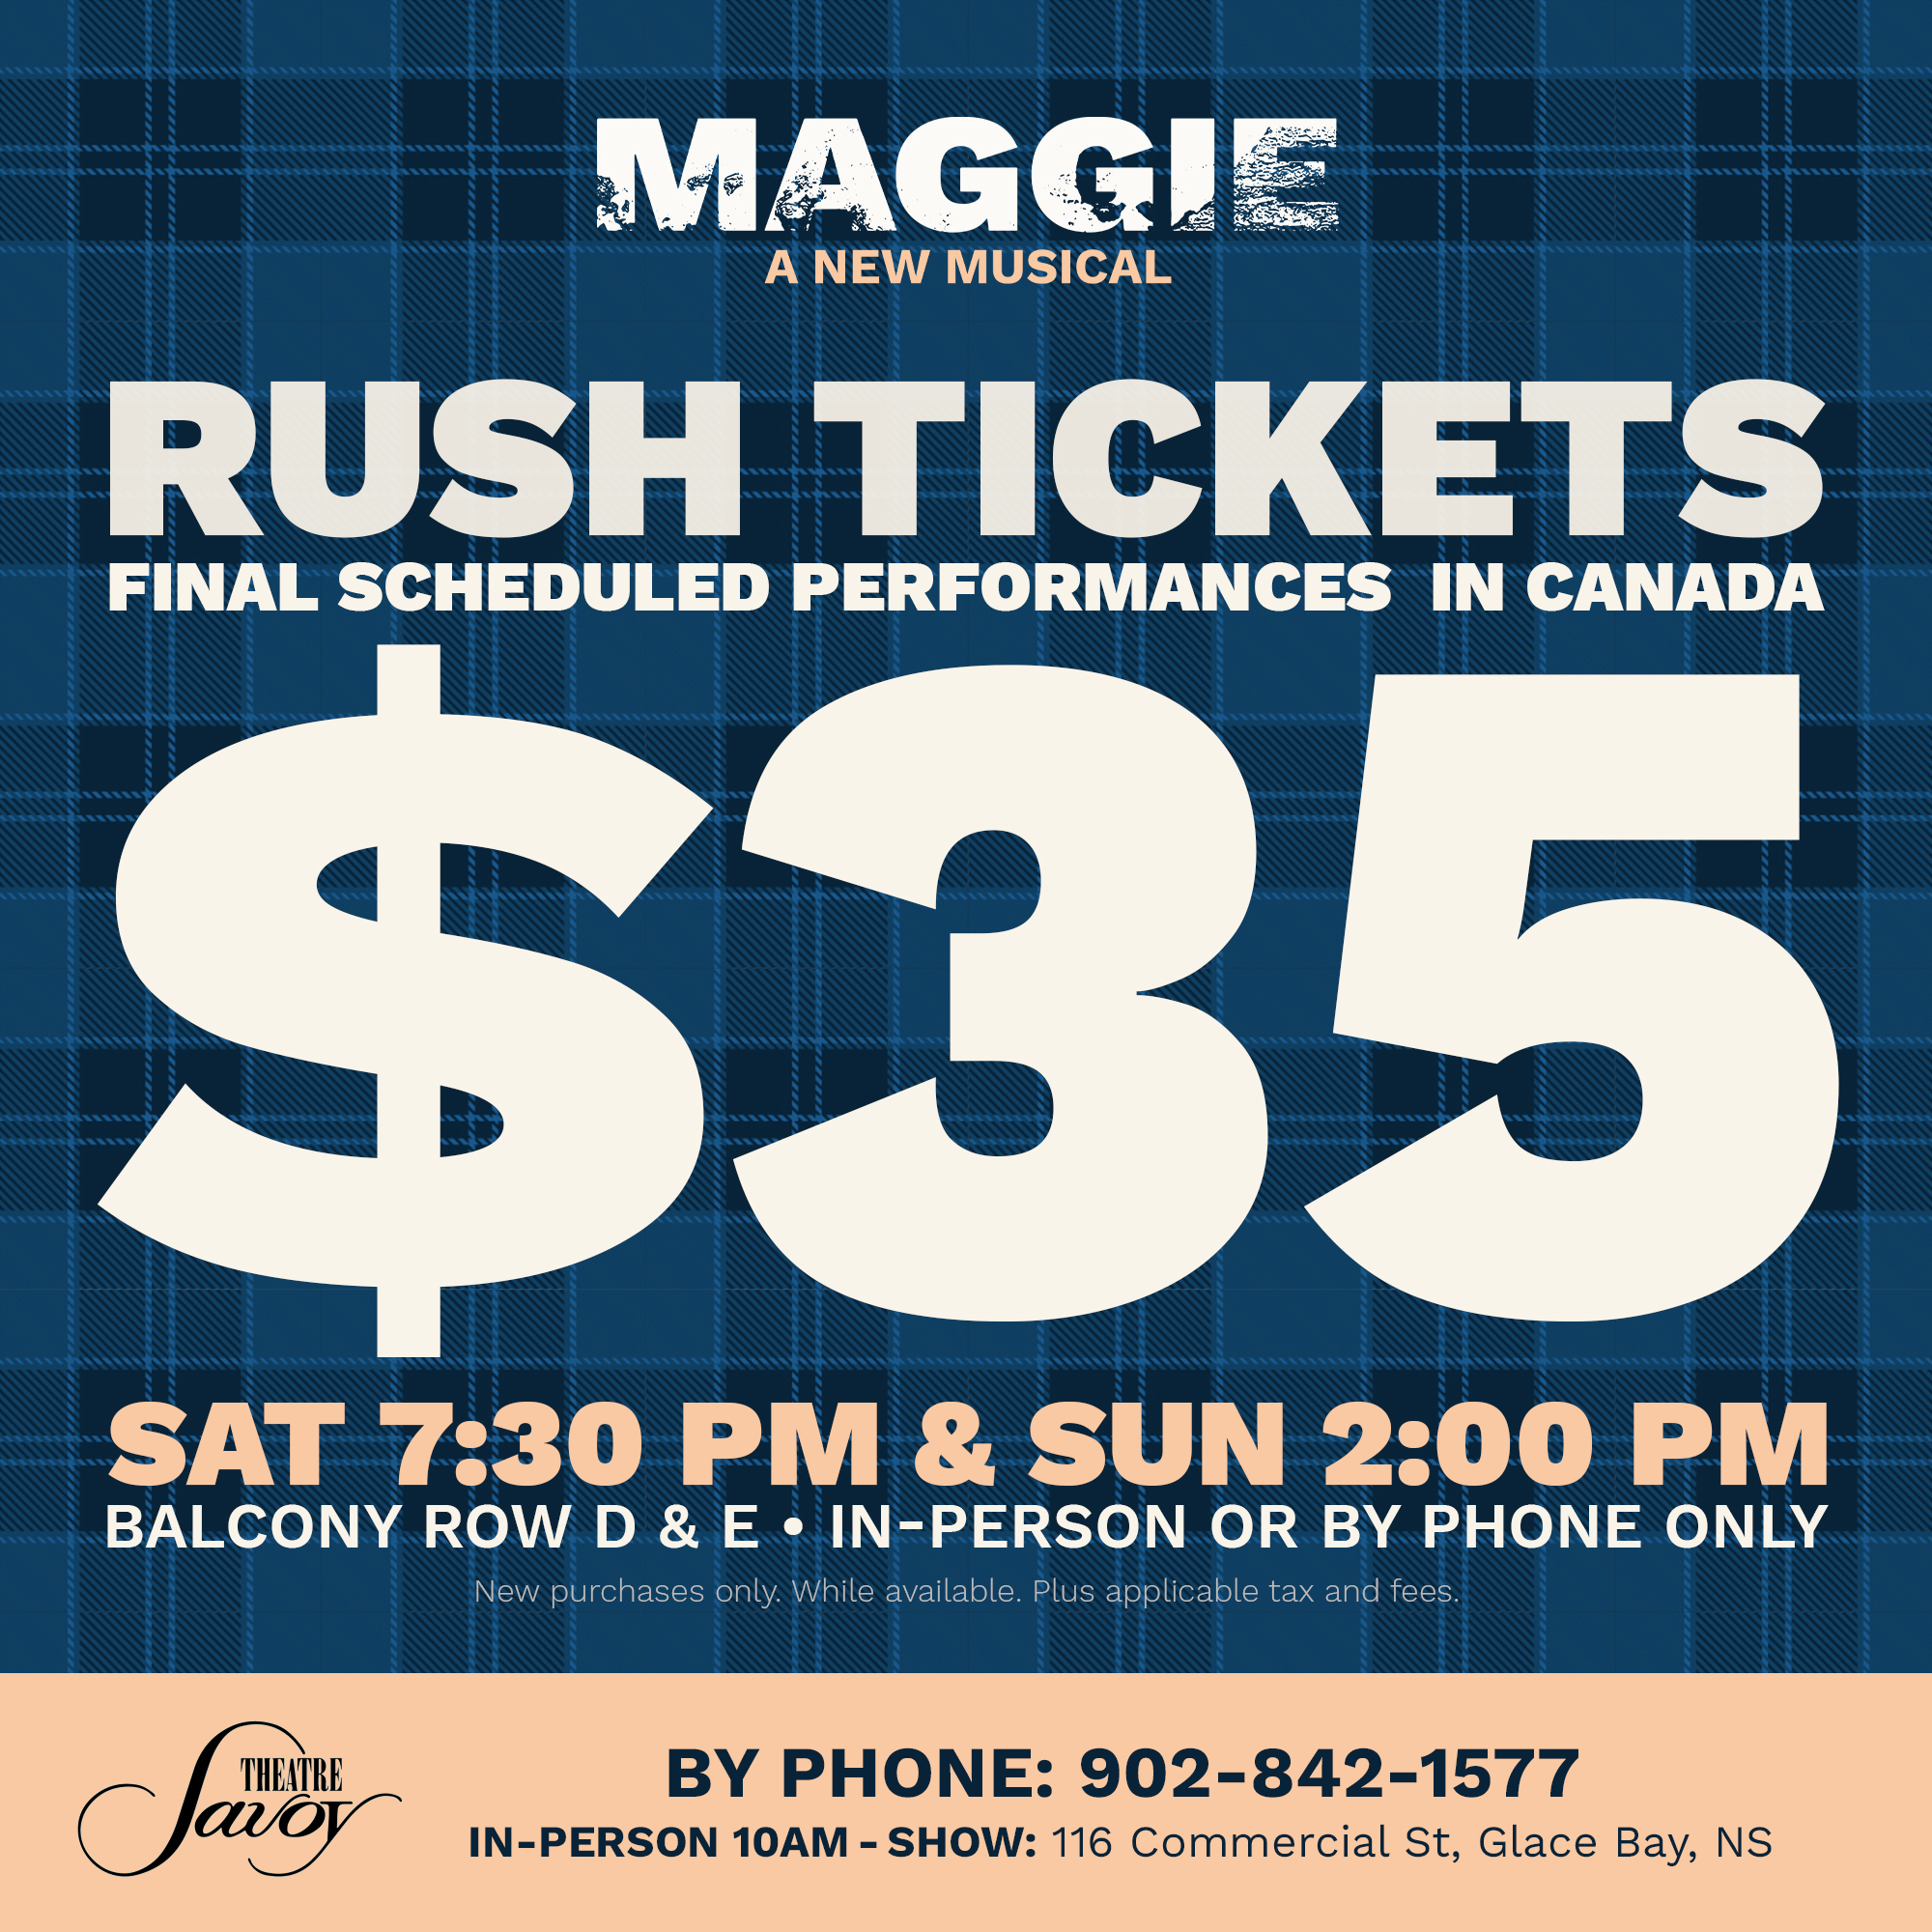 Maggie Rush Tickets